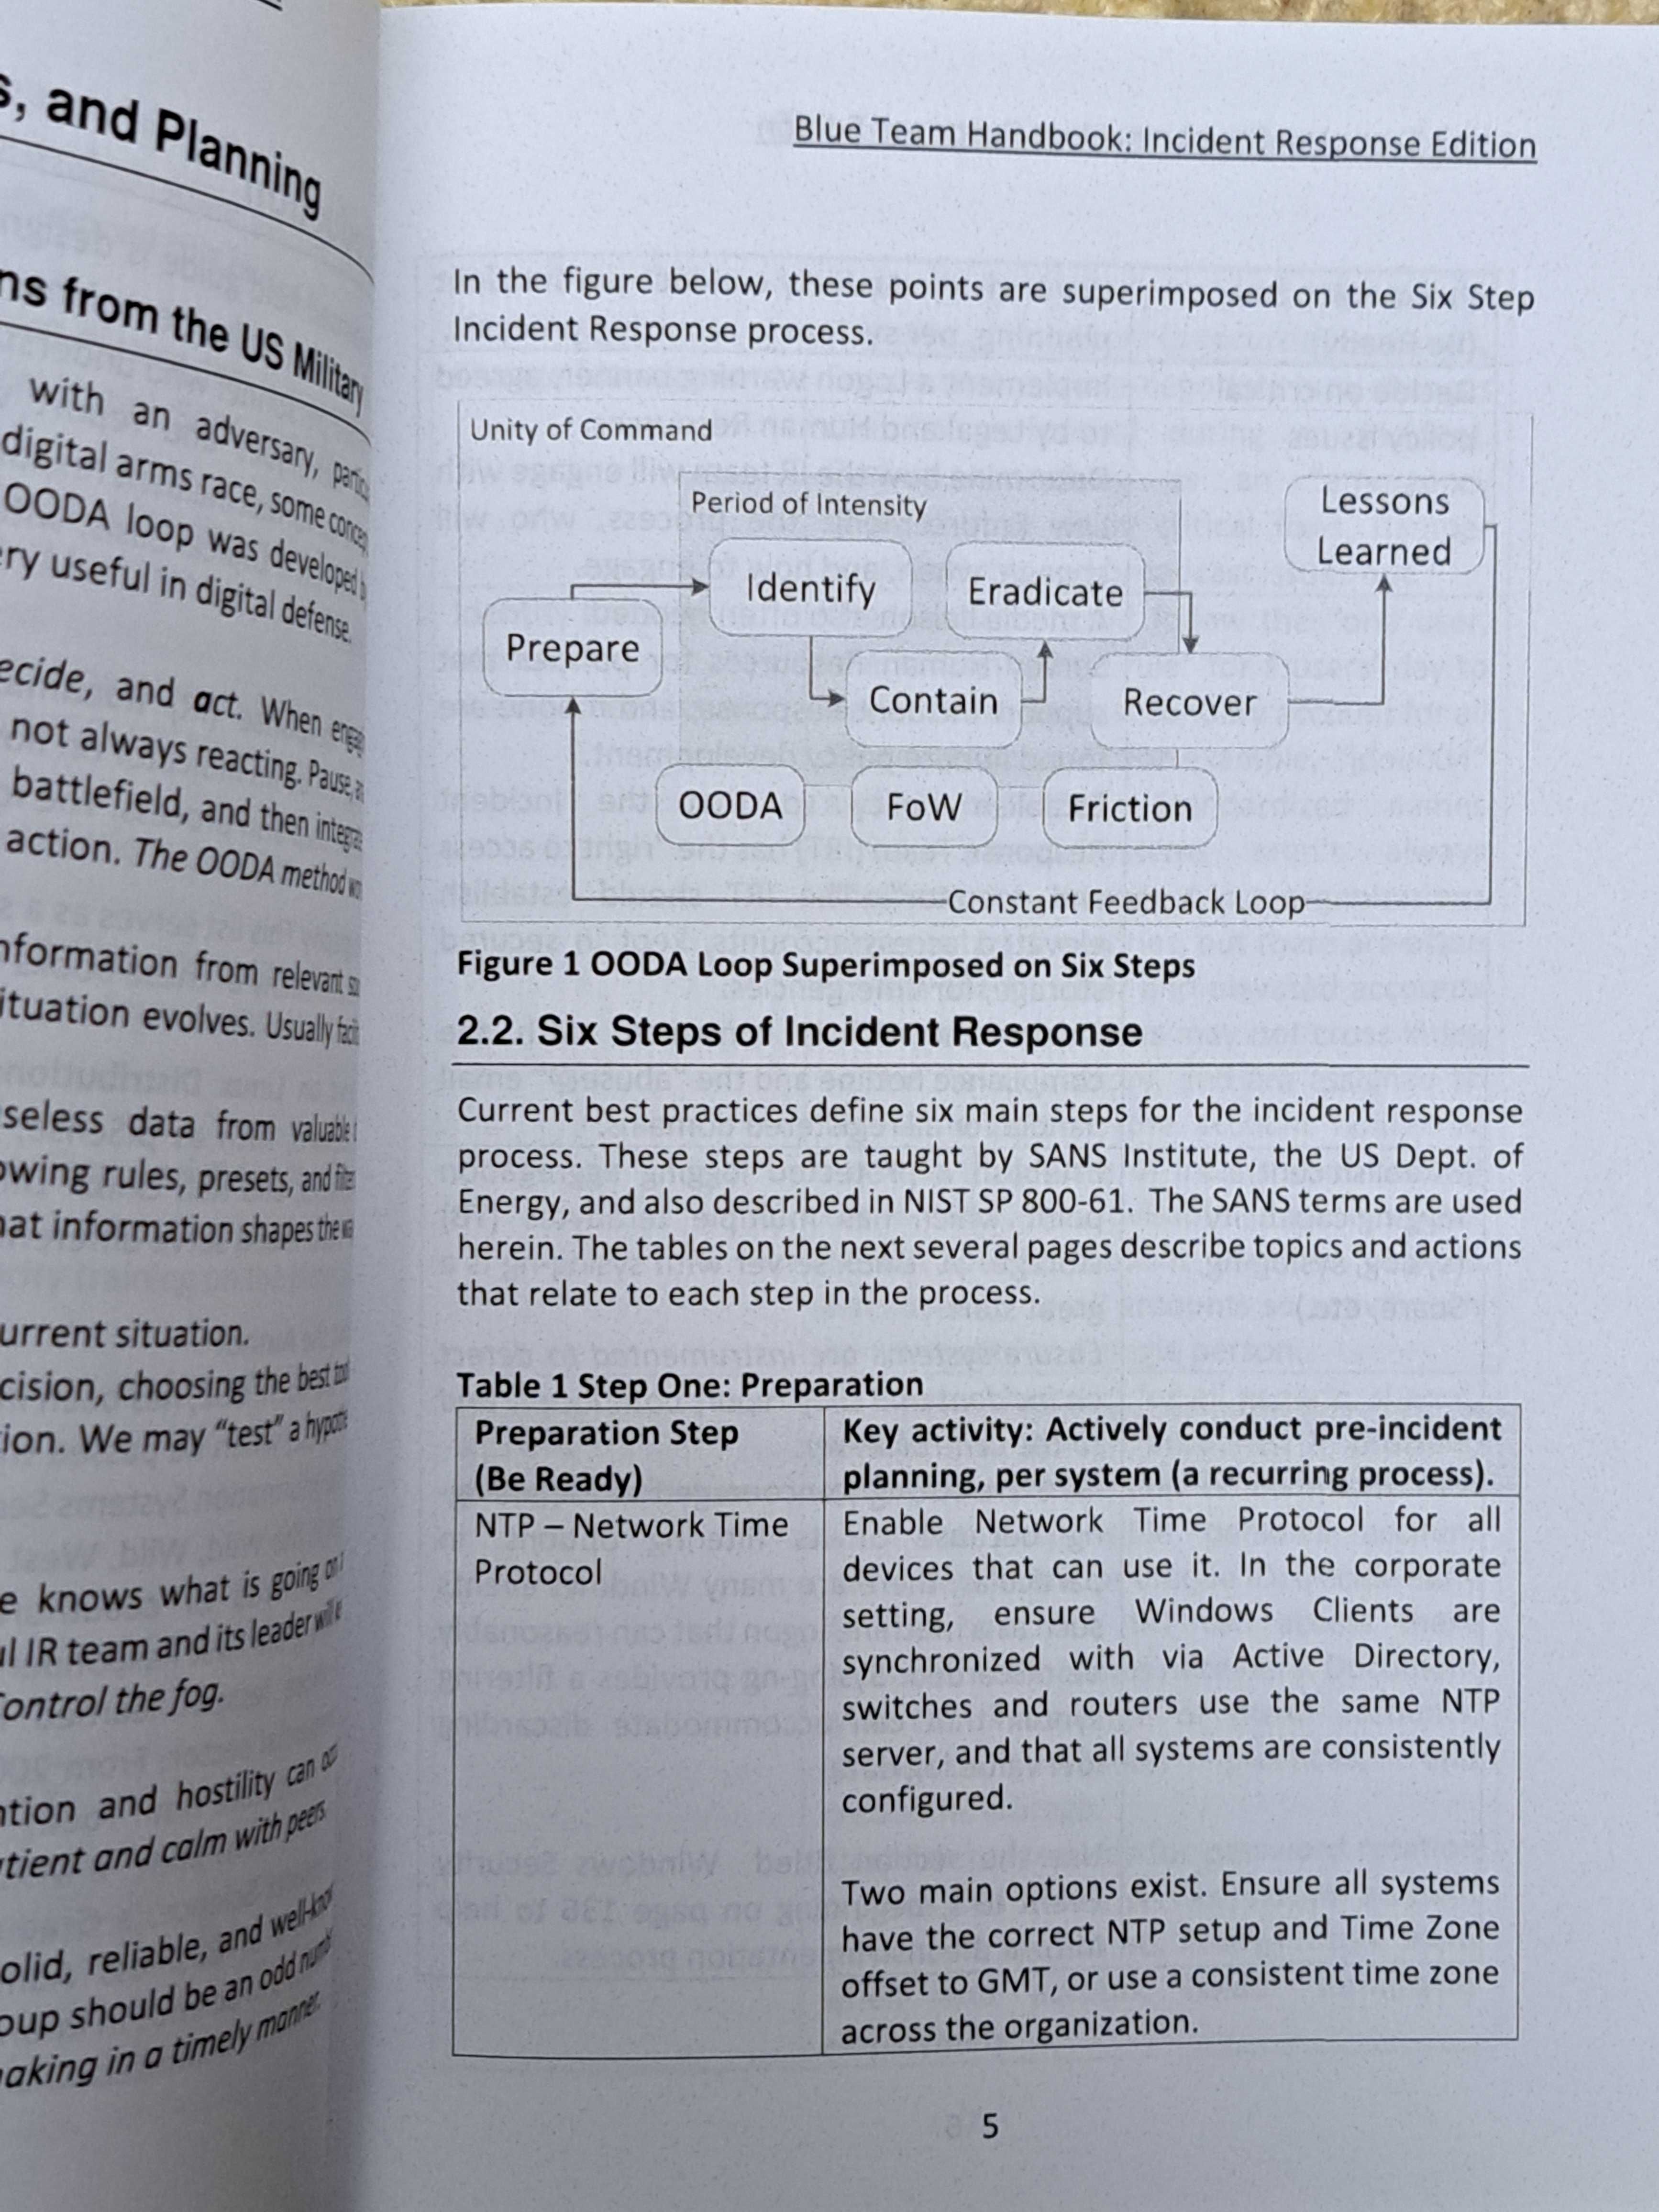 Blue Team Handbook: Incident Response (Cyber Security) by Murdoch